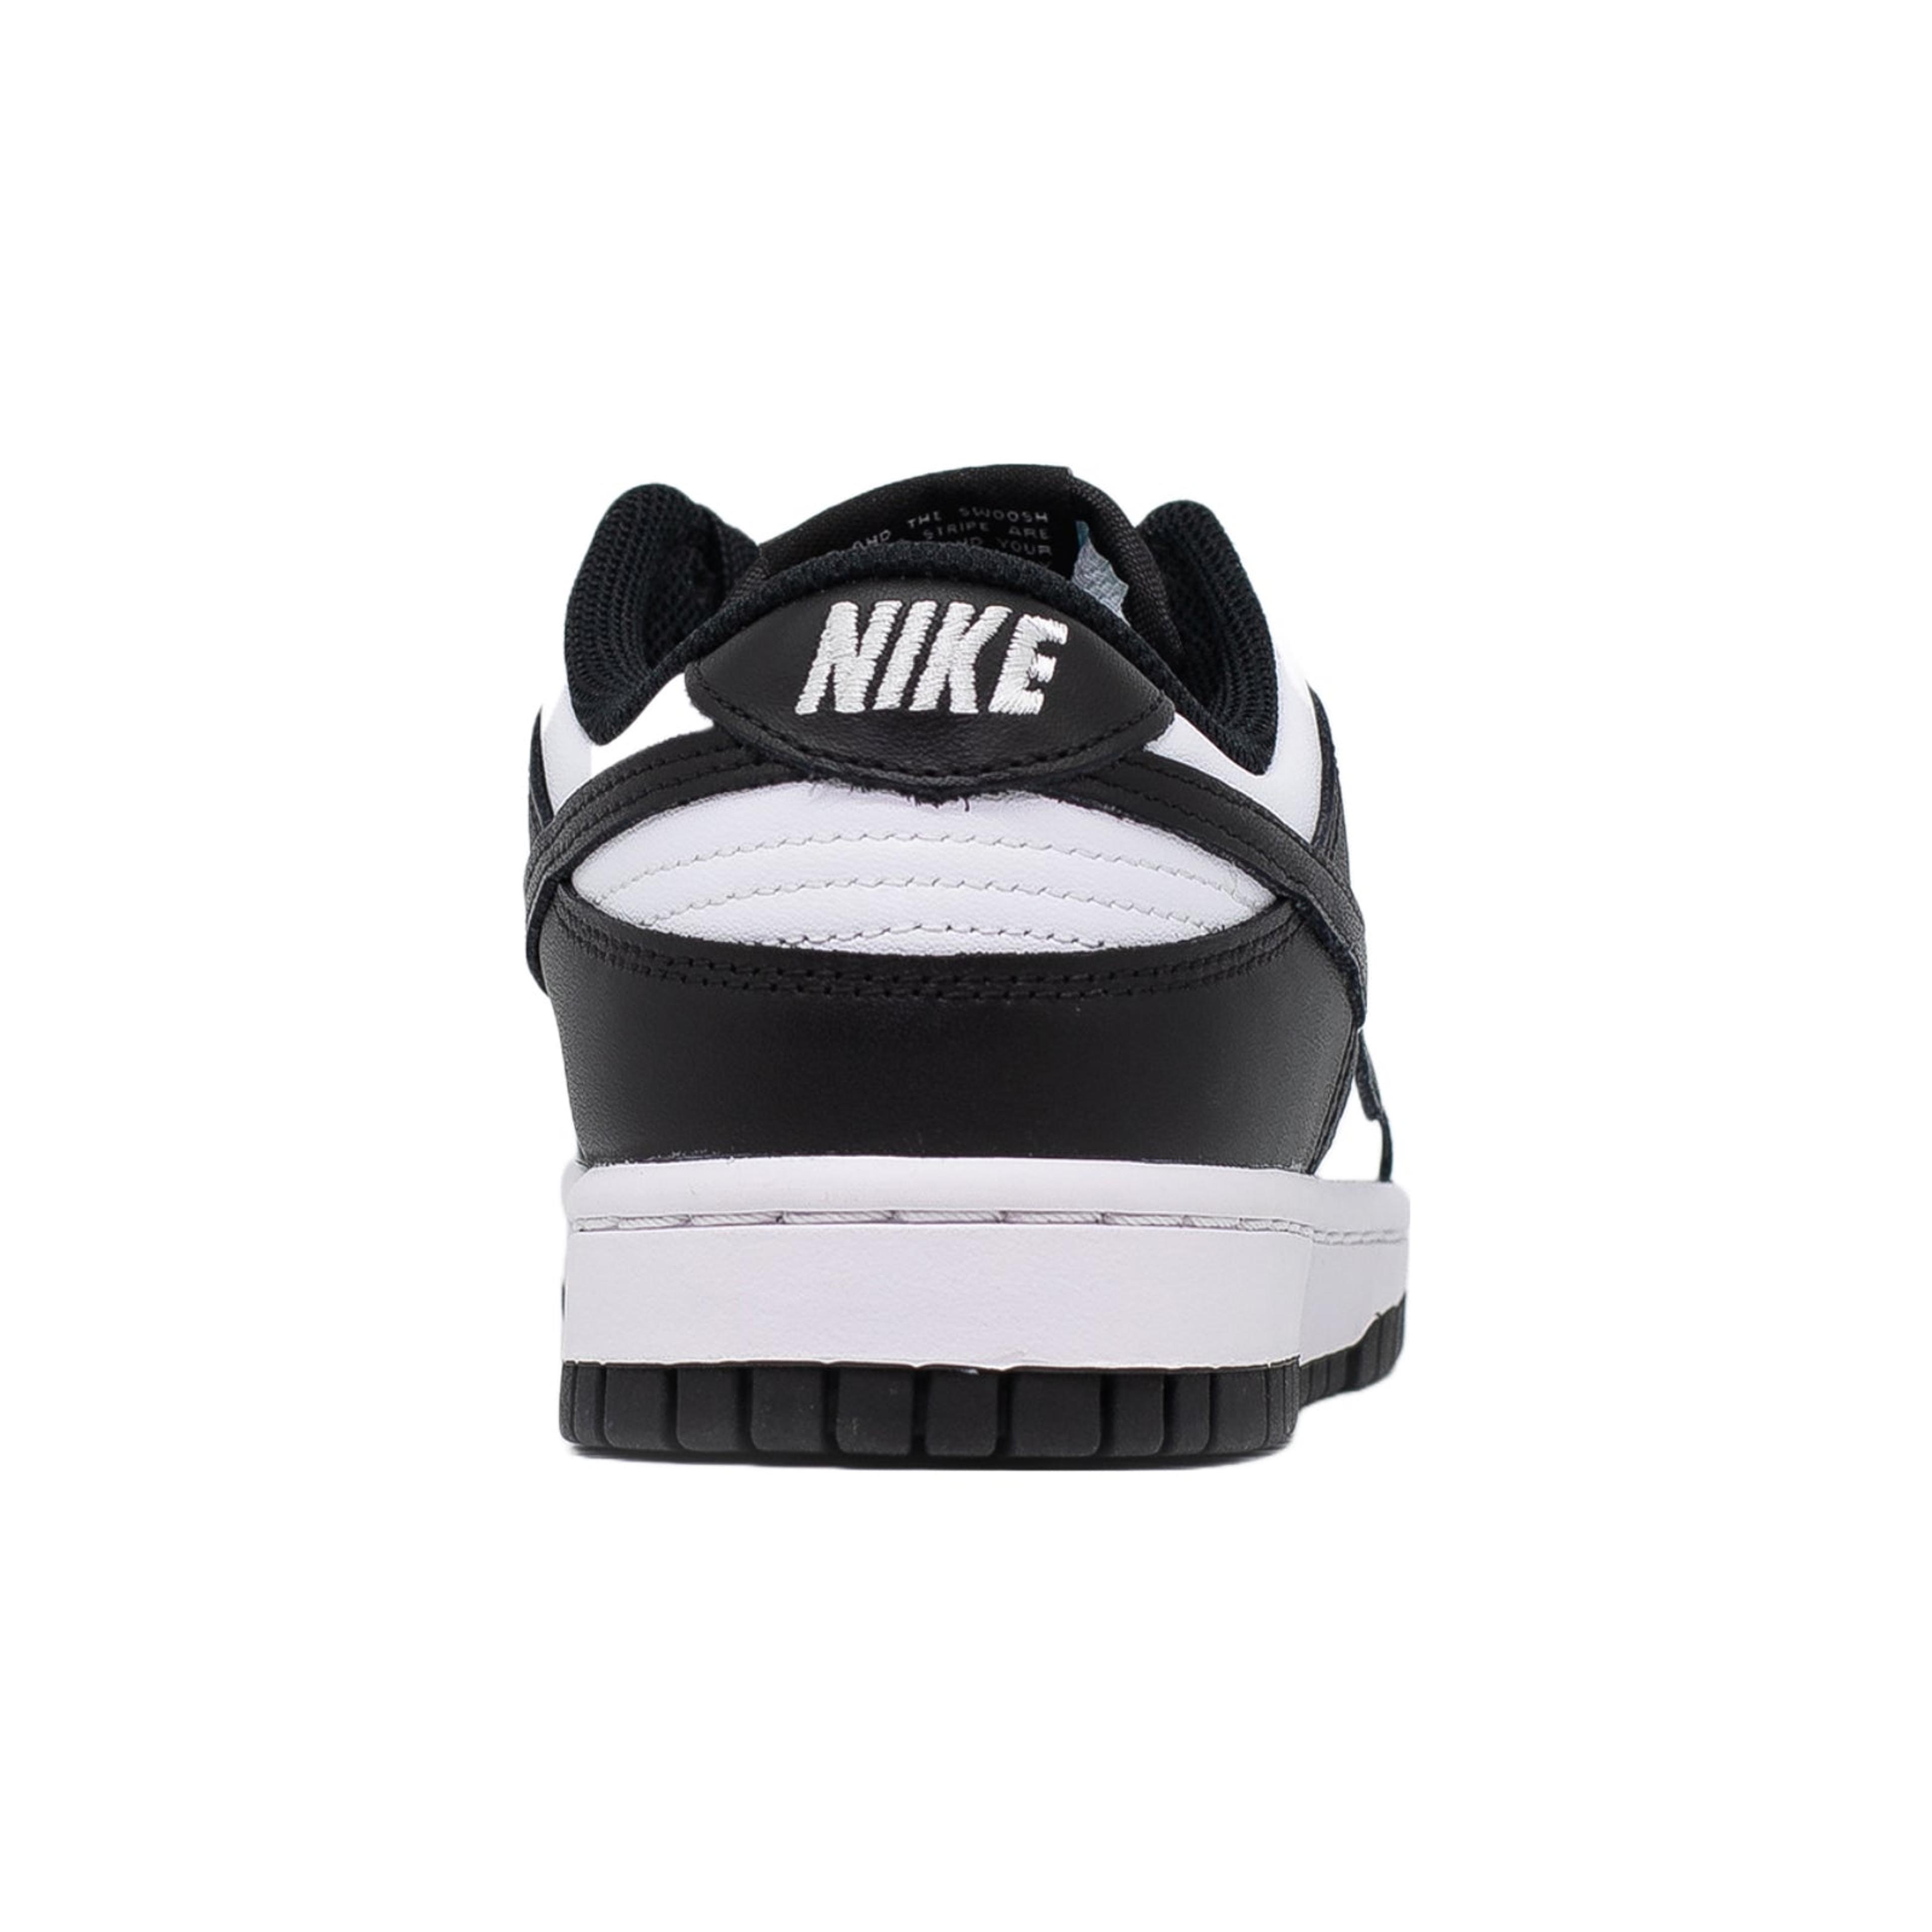 Alternate View 3 of Nike Dunk Low, Black White